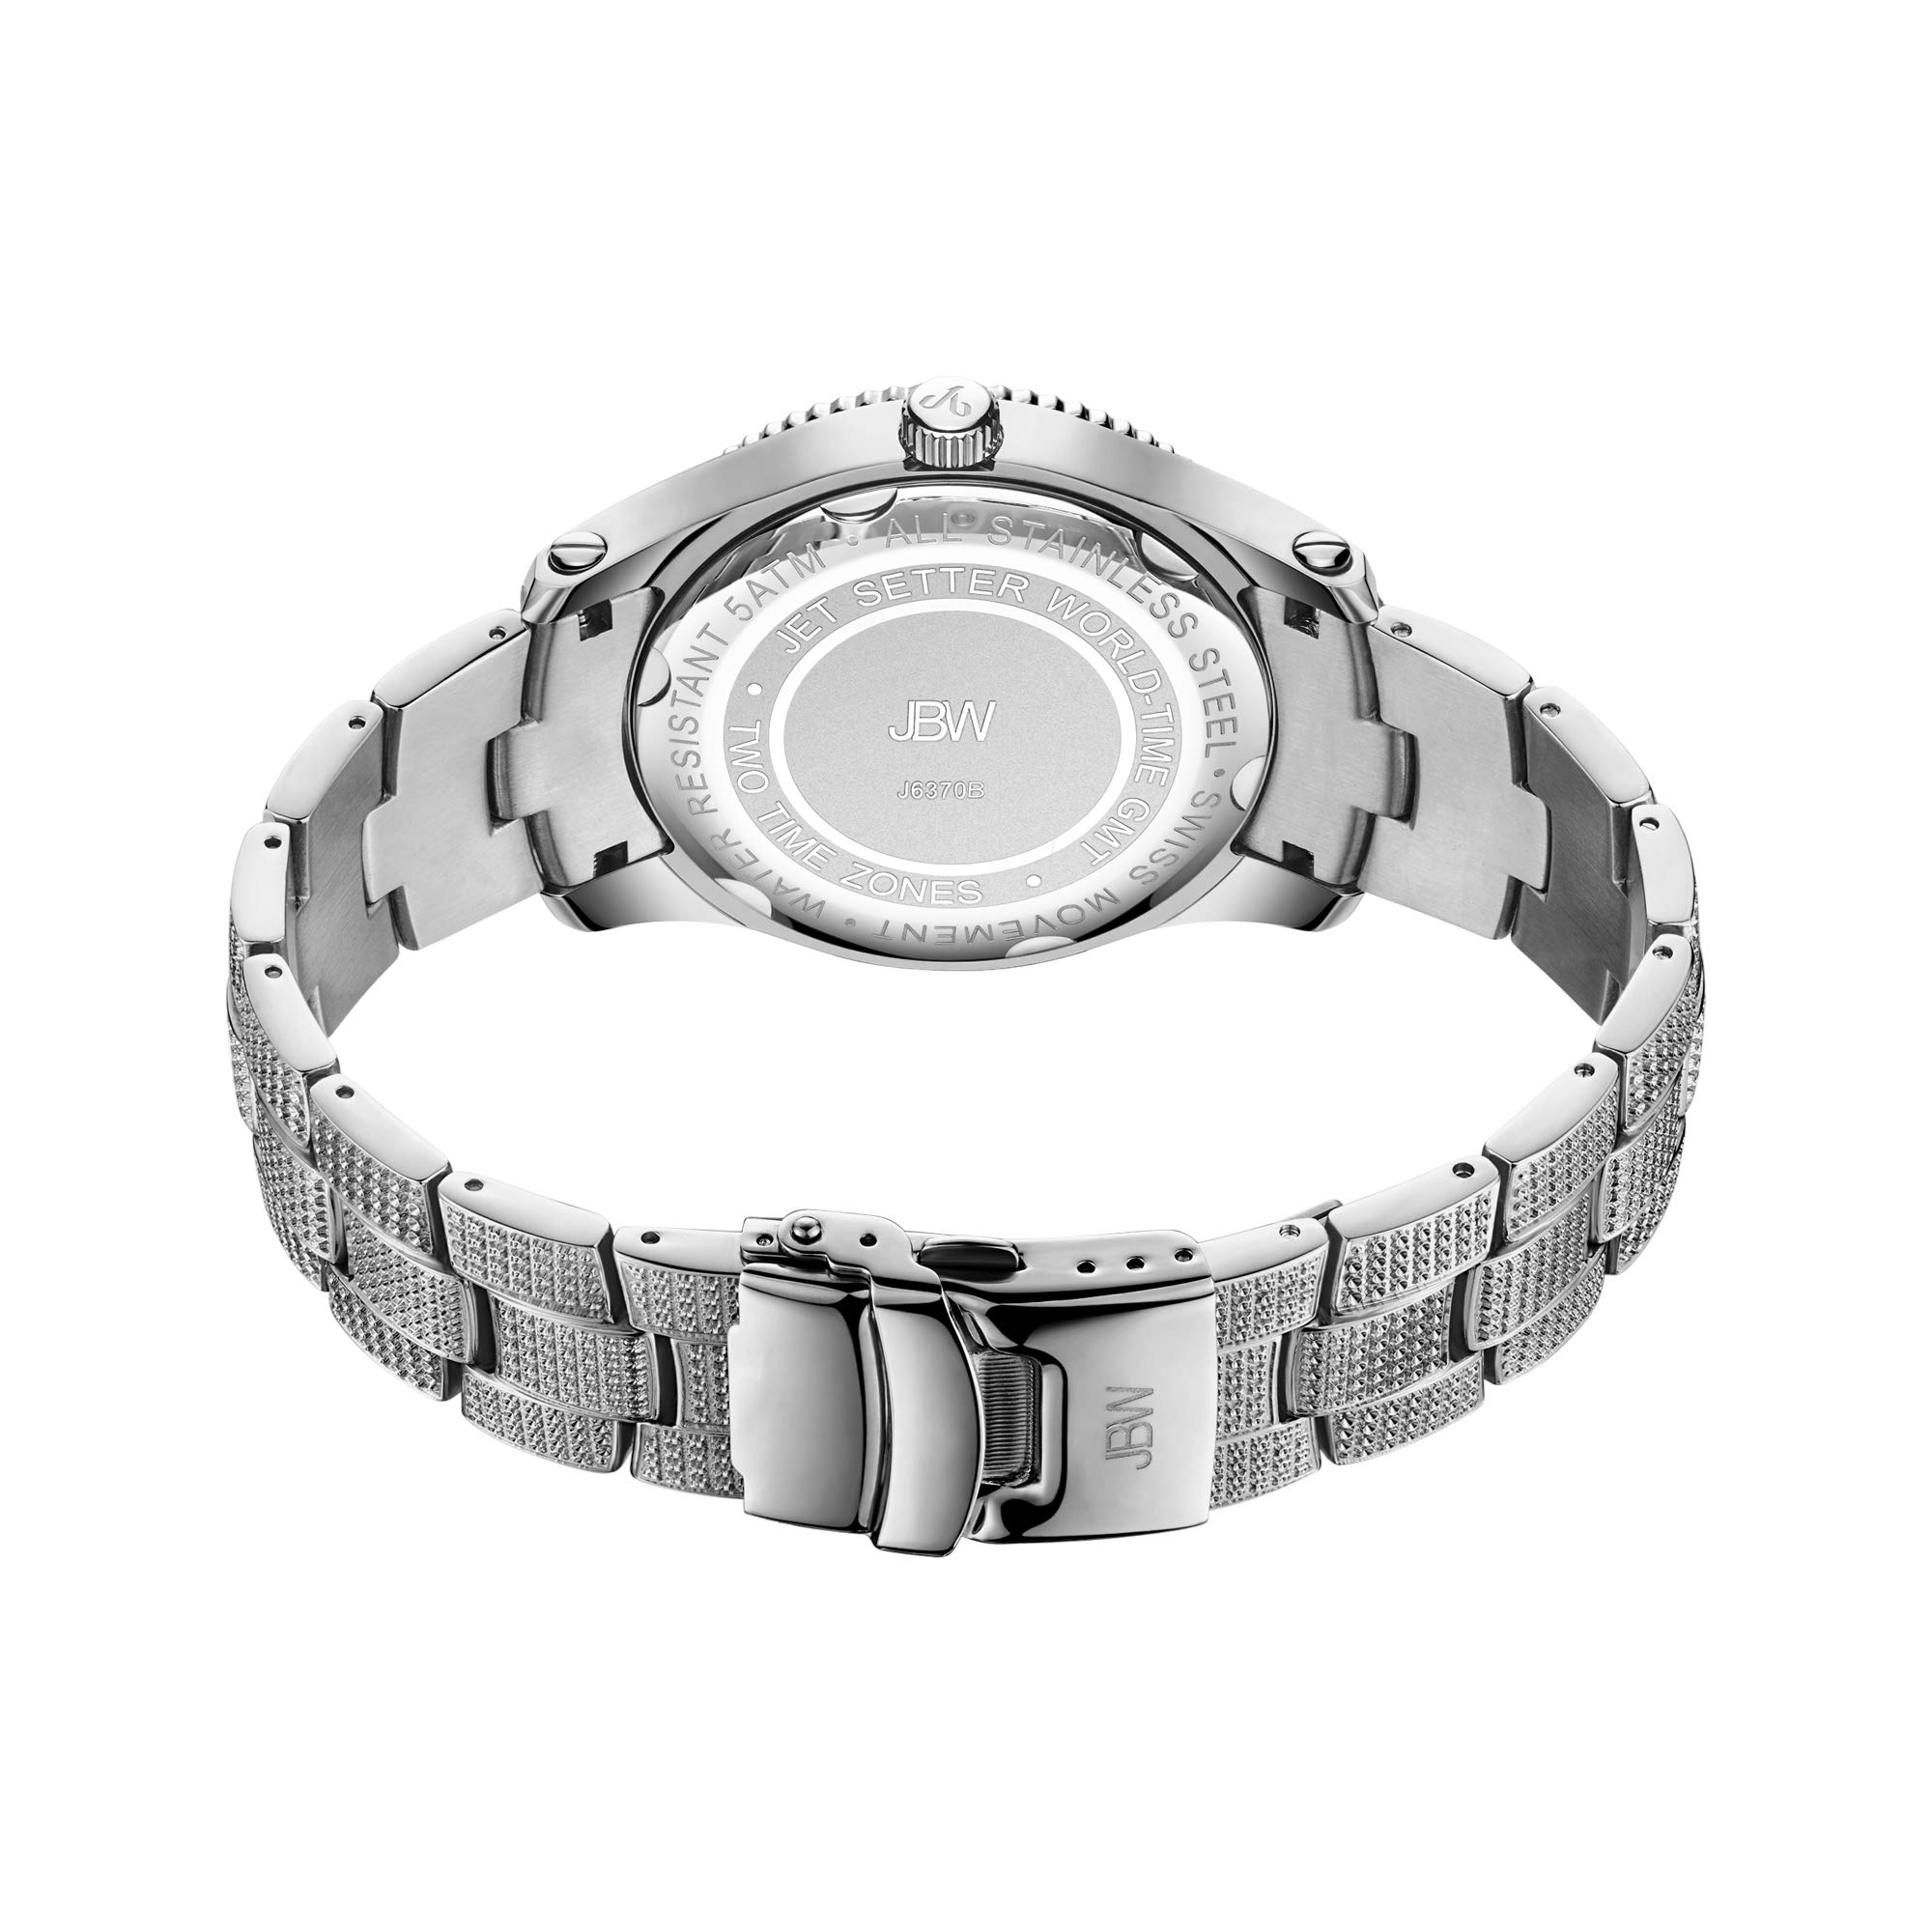 JBW Luxury Men's Jet Setter GMT J6370 1.00 ctw Diamond Wrist Watch with Stainless Steel Bracelet